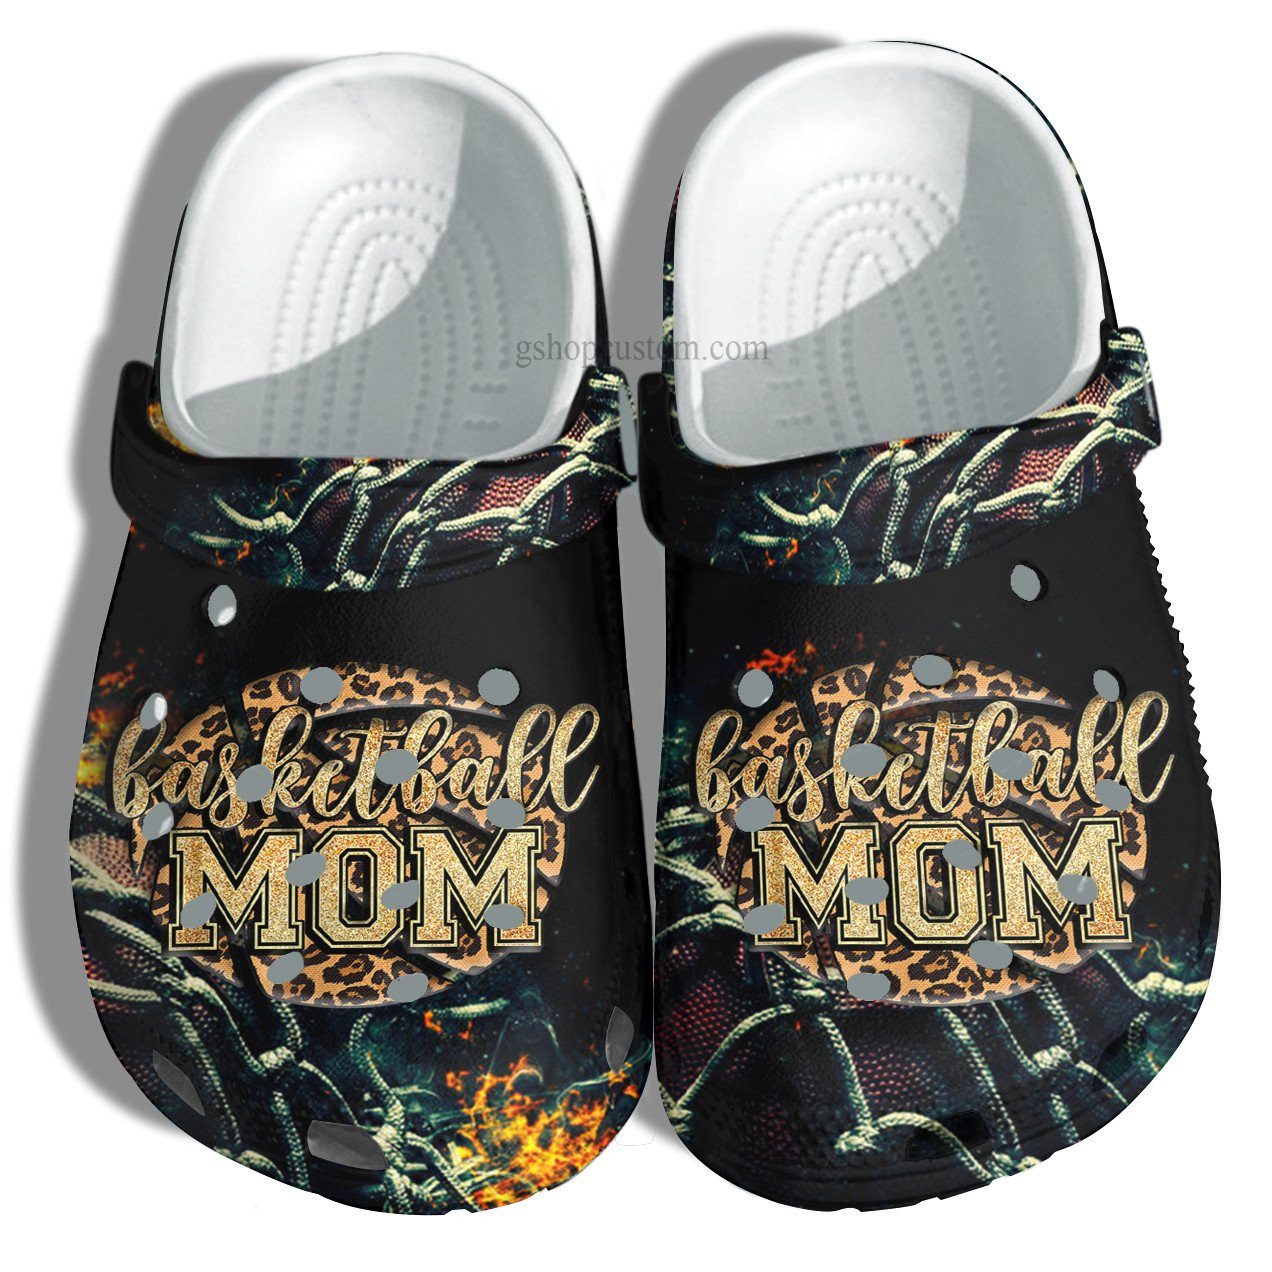 Basketball Mom Cool Women Croc Shoes Gift Grandma - Basketball Cheer Up Son Player Mom Crocs Shoes Gift Mommy Birthday